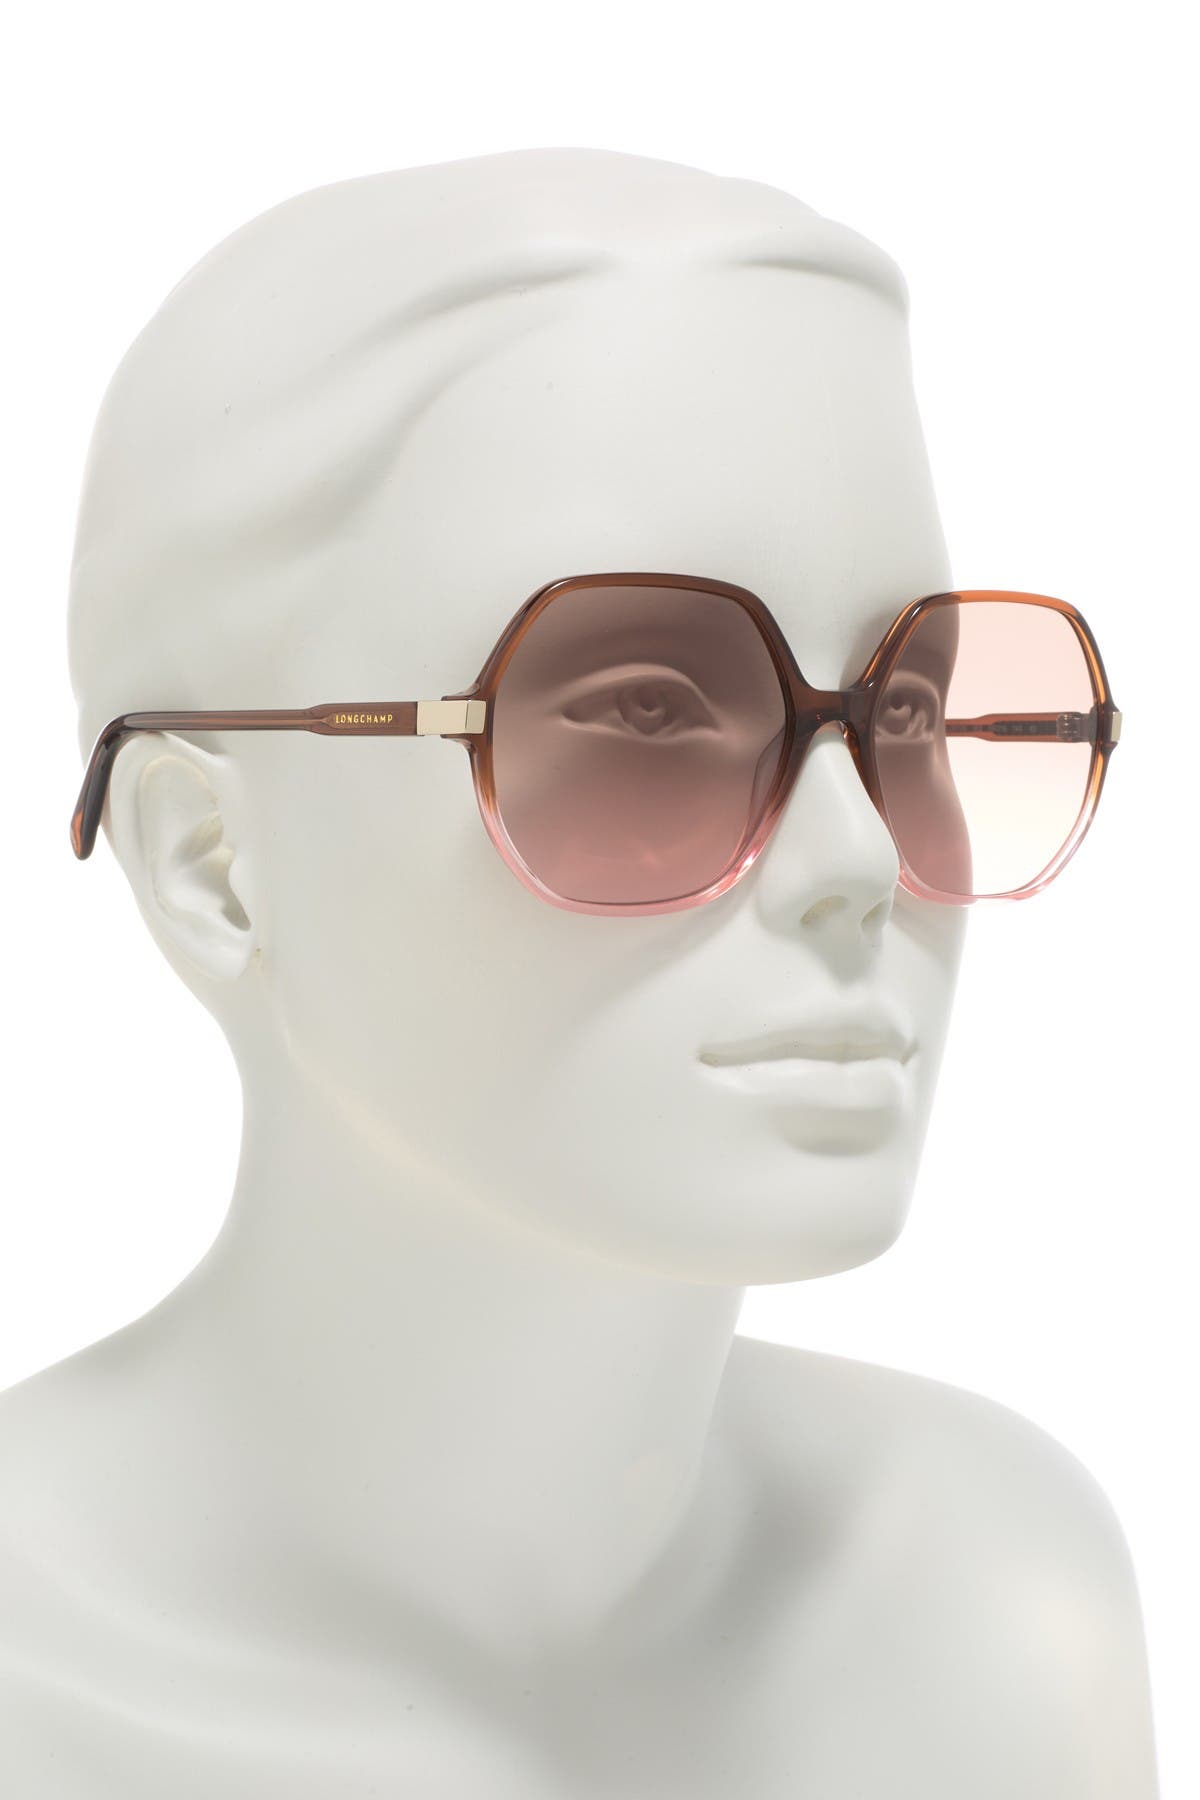 longchamps sunglasses nordstrom rack